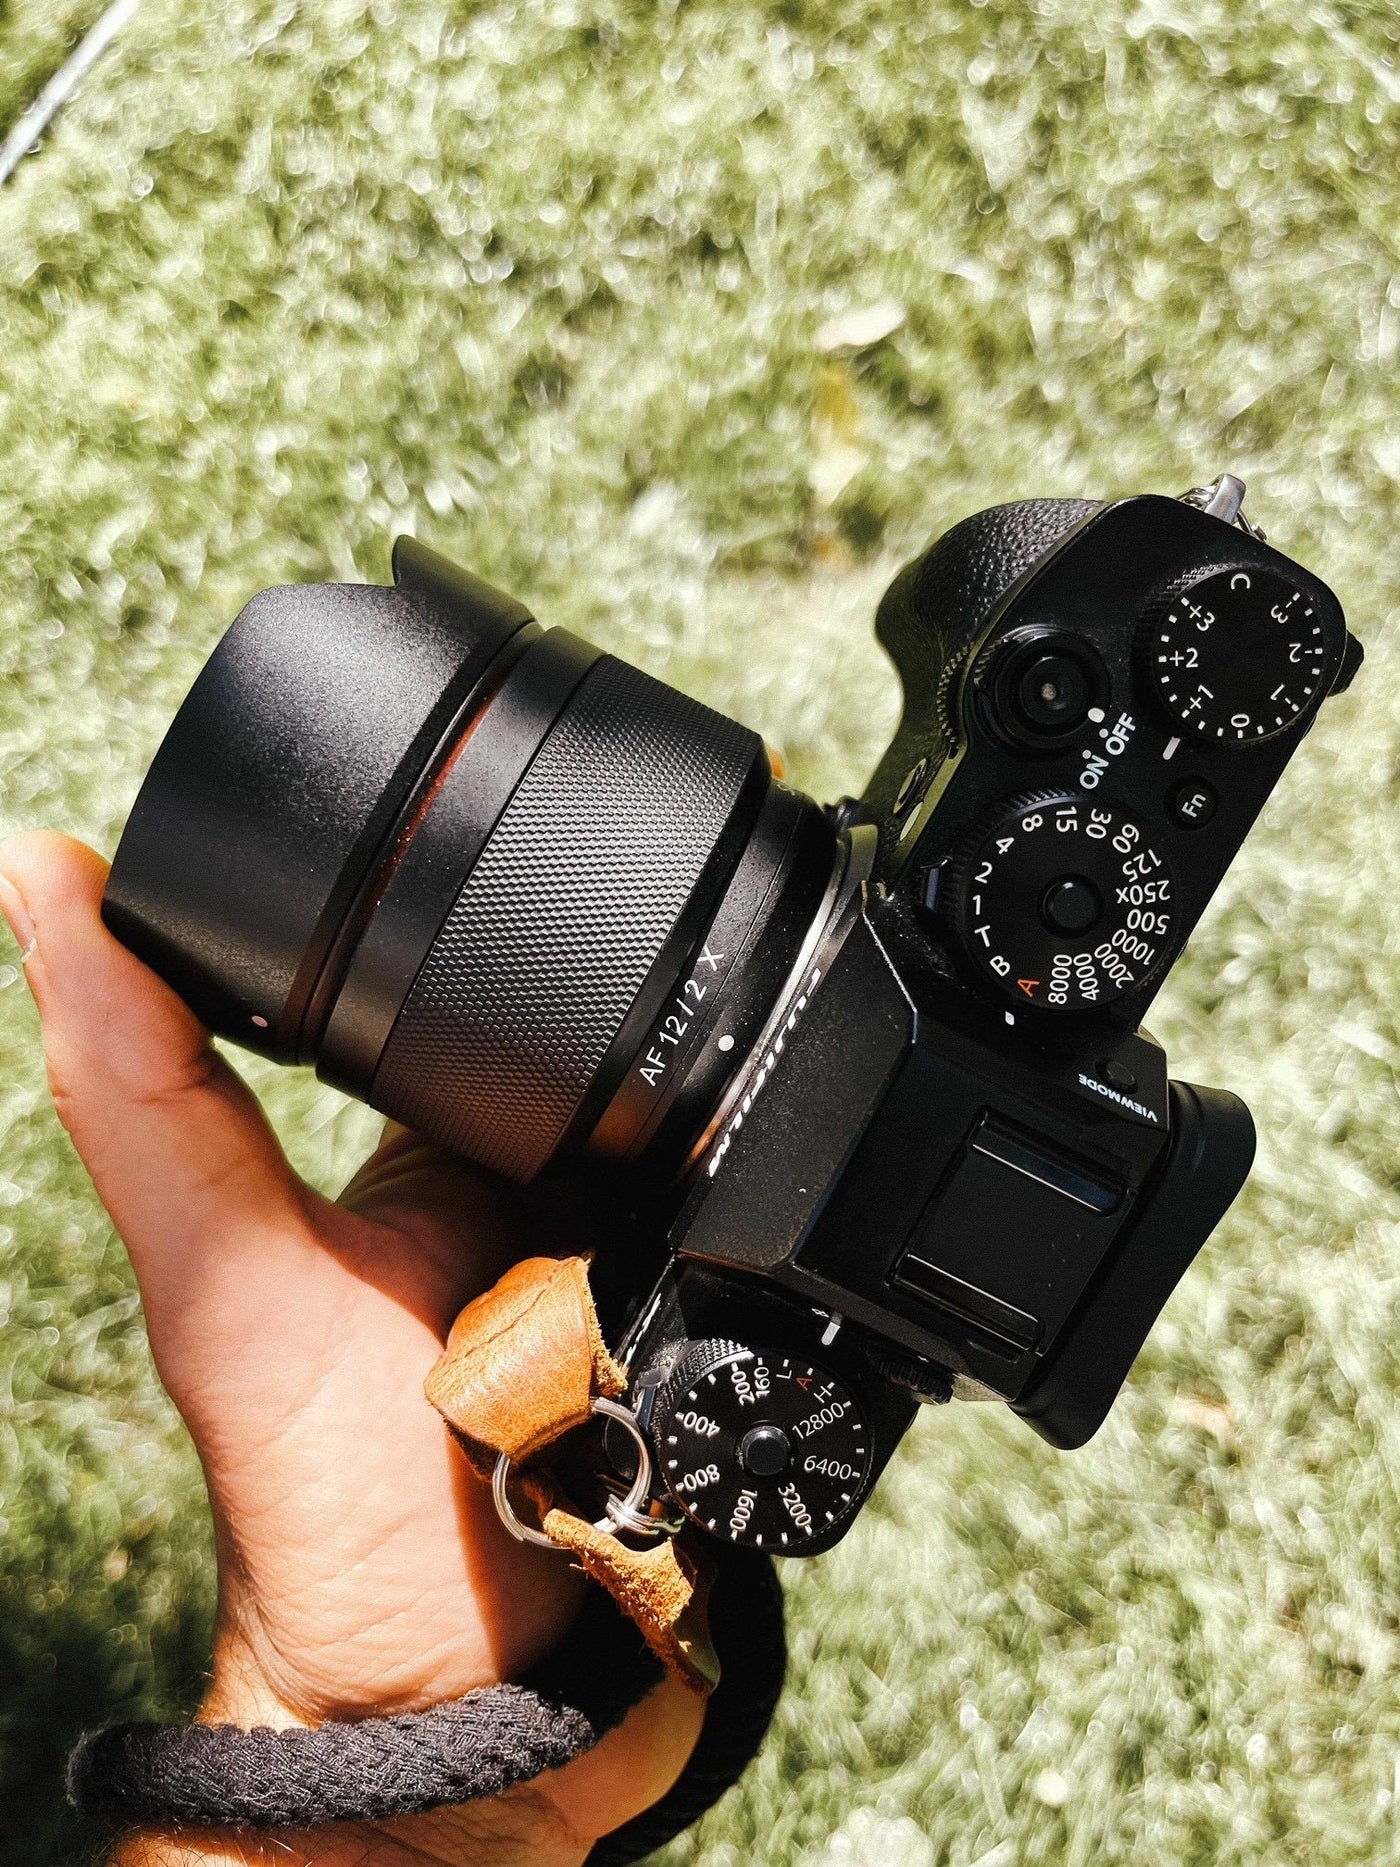 12mm F2.0 AF APS-C Ultra Wide Angle (Fuji X) - Lenses –